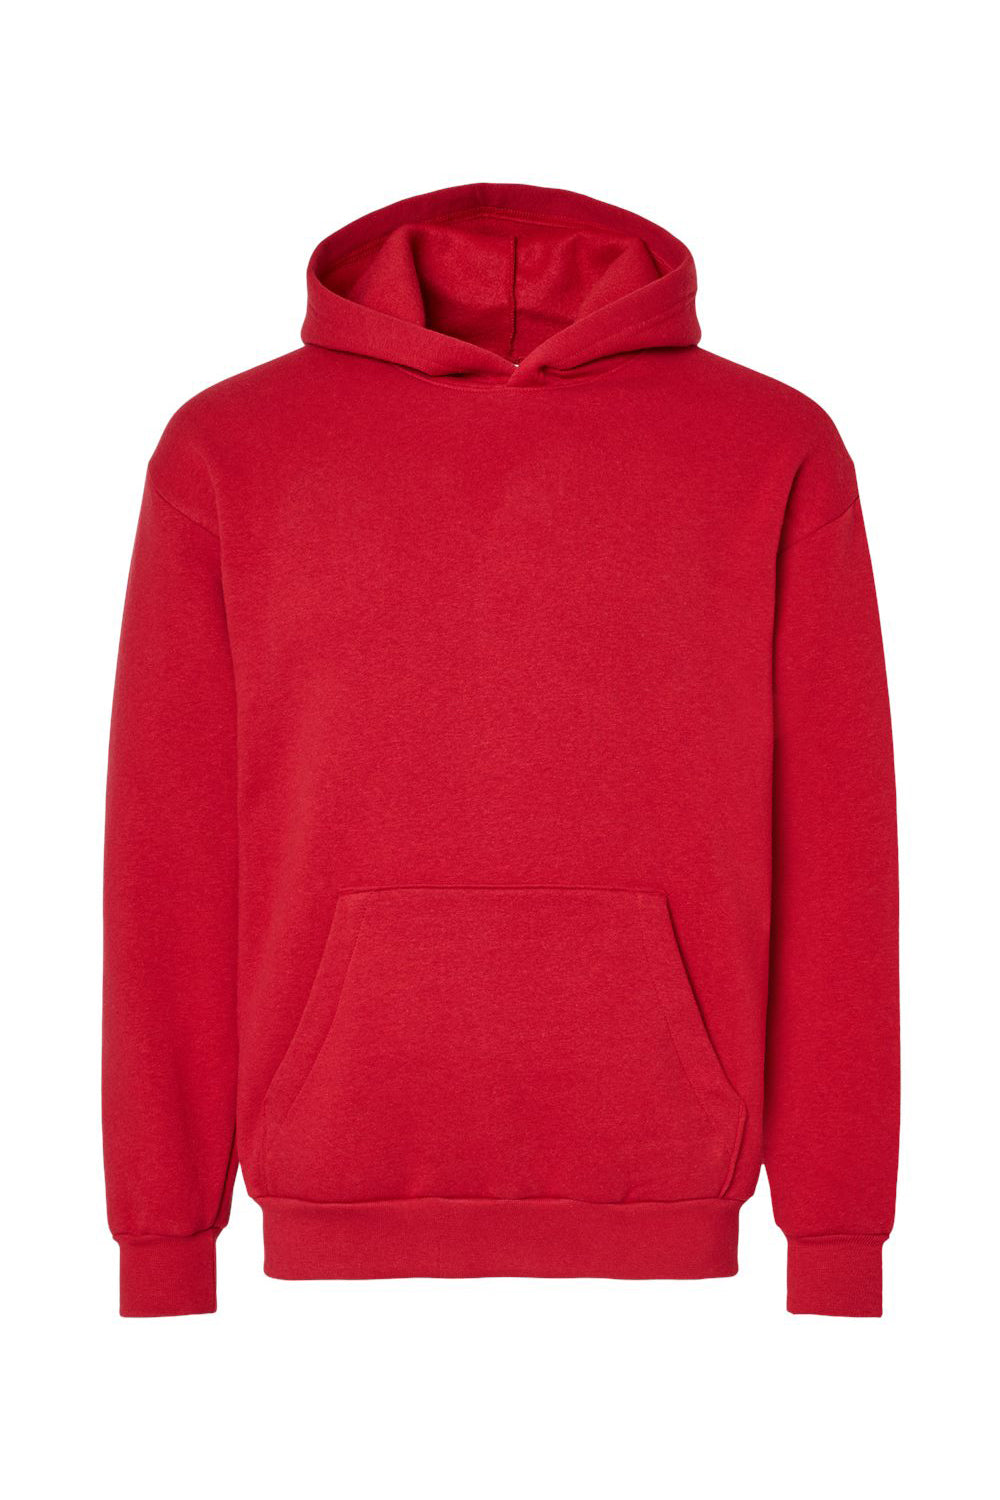 American Apparel RF498 Mens ReFlex Fleece Hooded Sweatshirt Hoodie Cardinal Red Flat Front